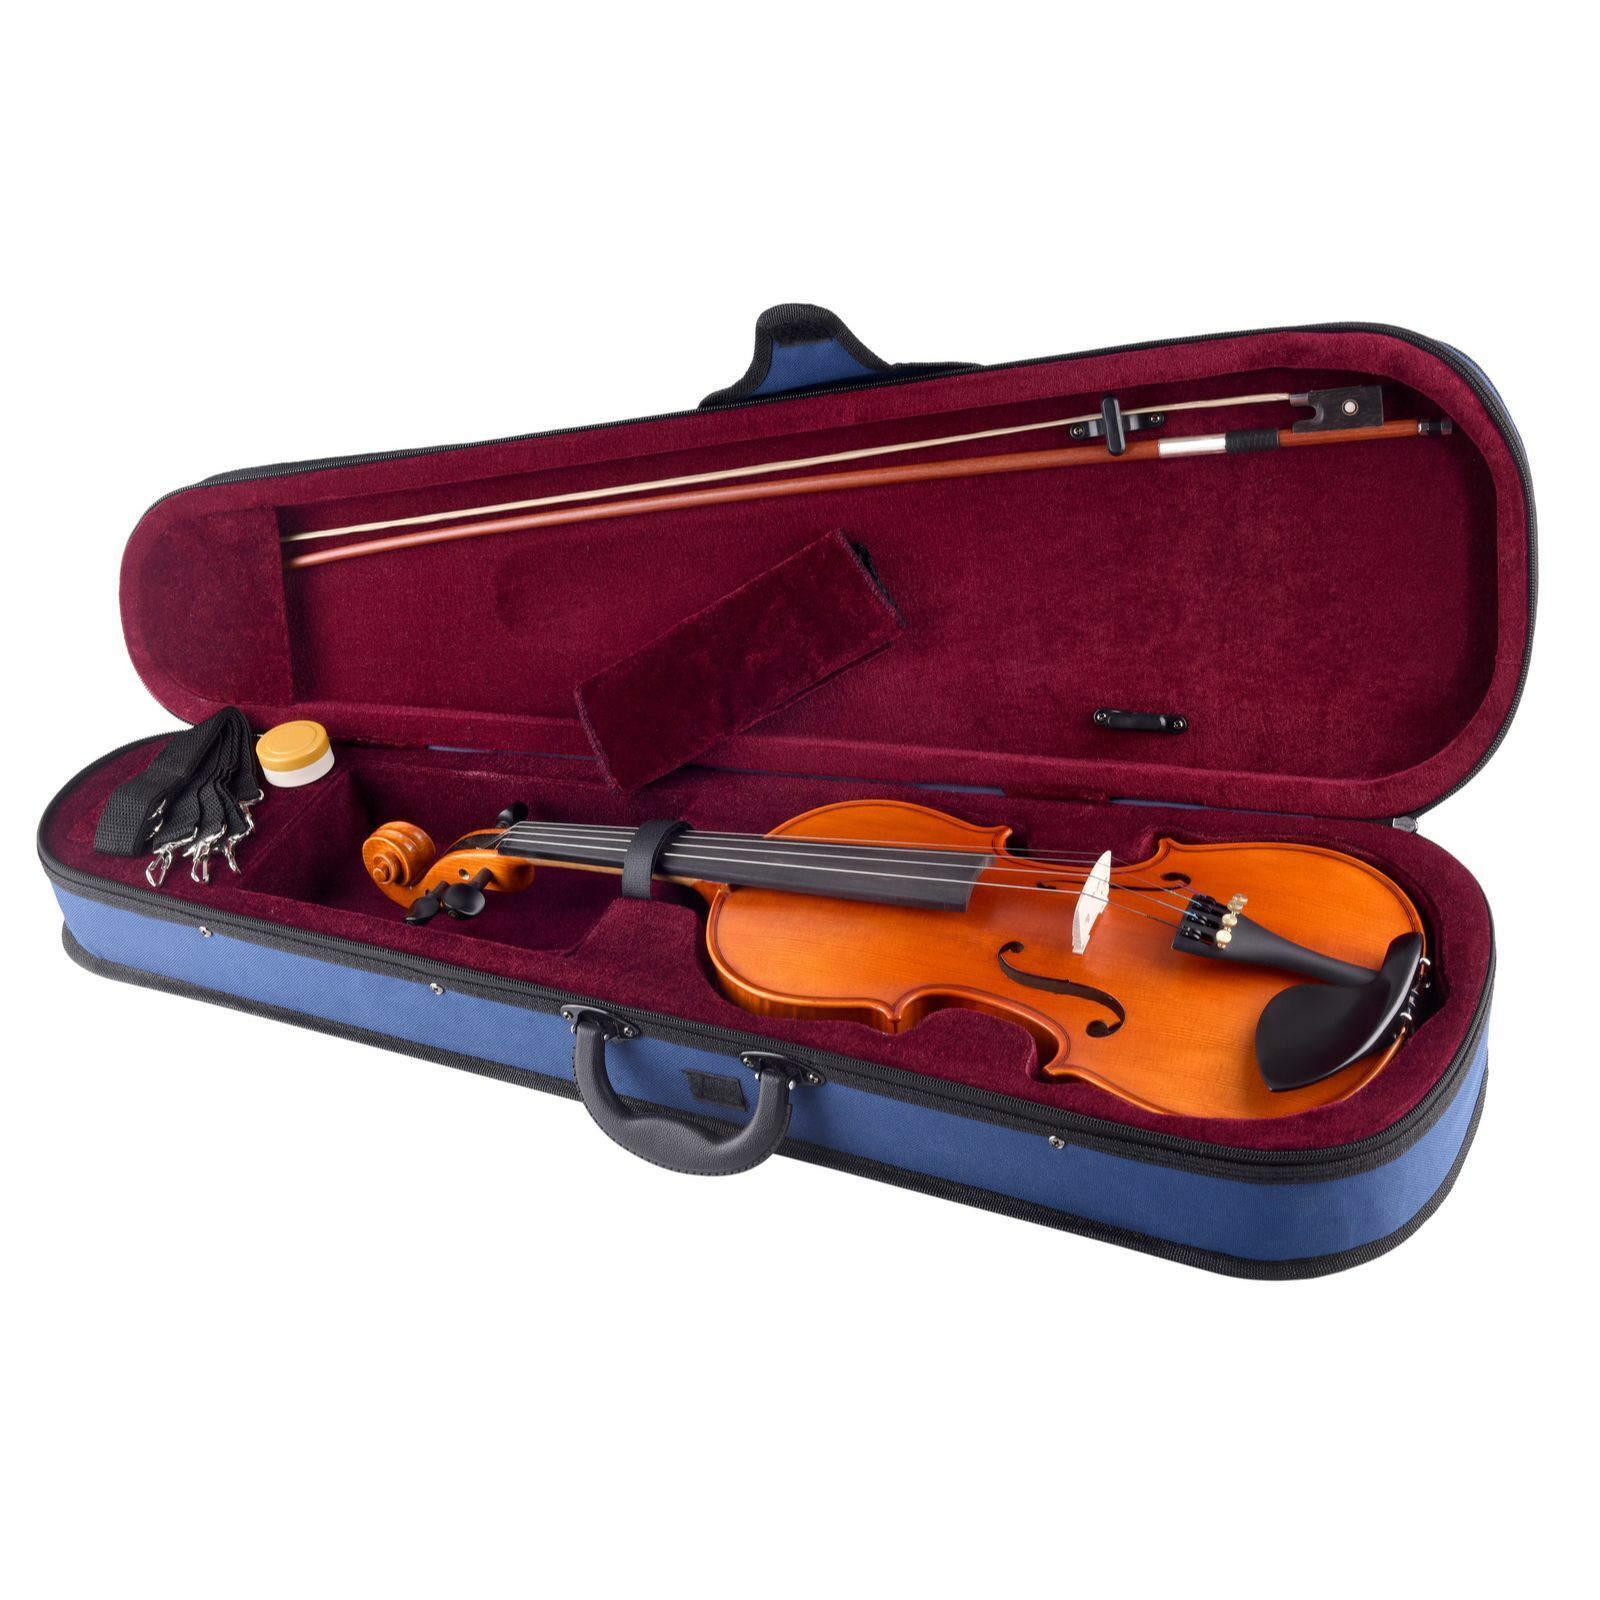 Axiom Concerto Violin Outfit - 4/4 Size